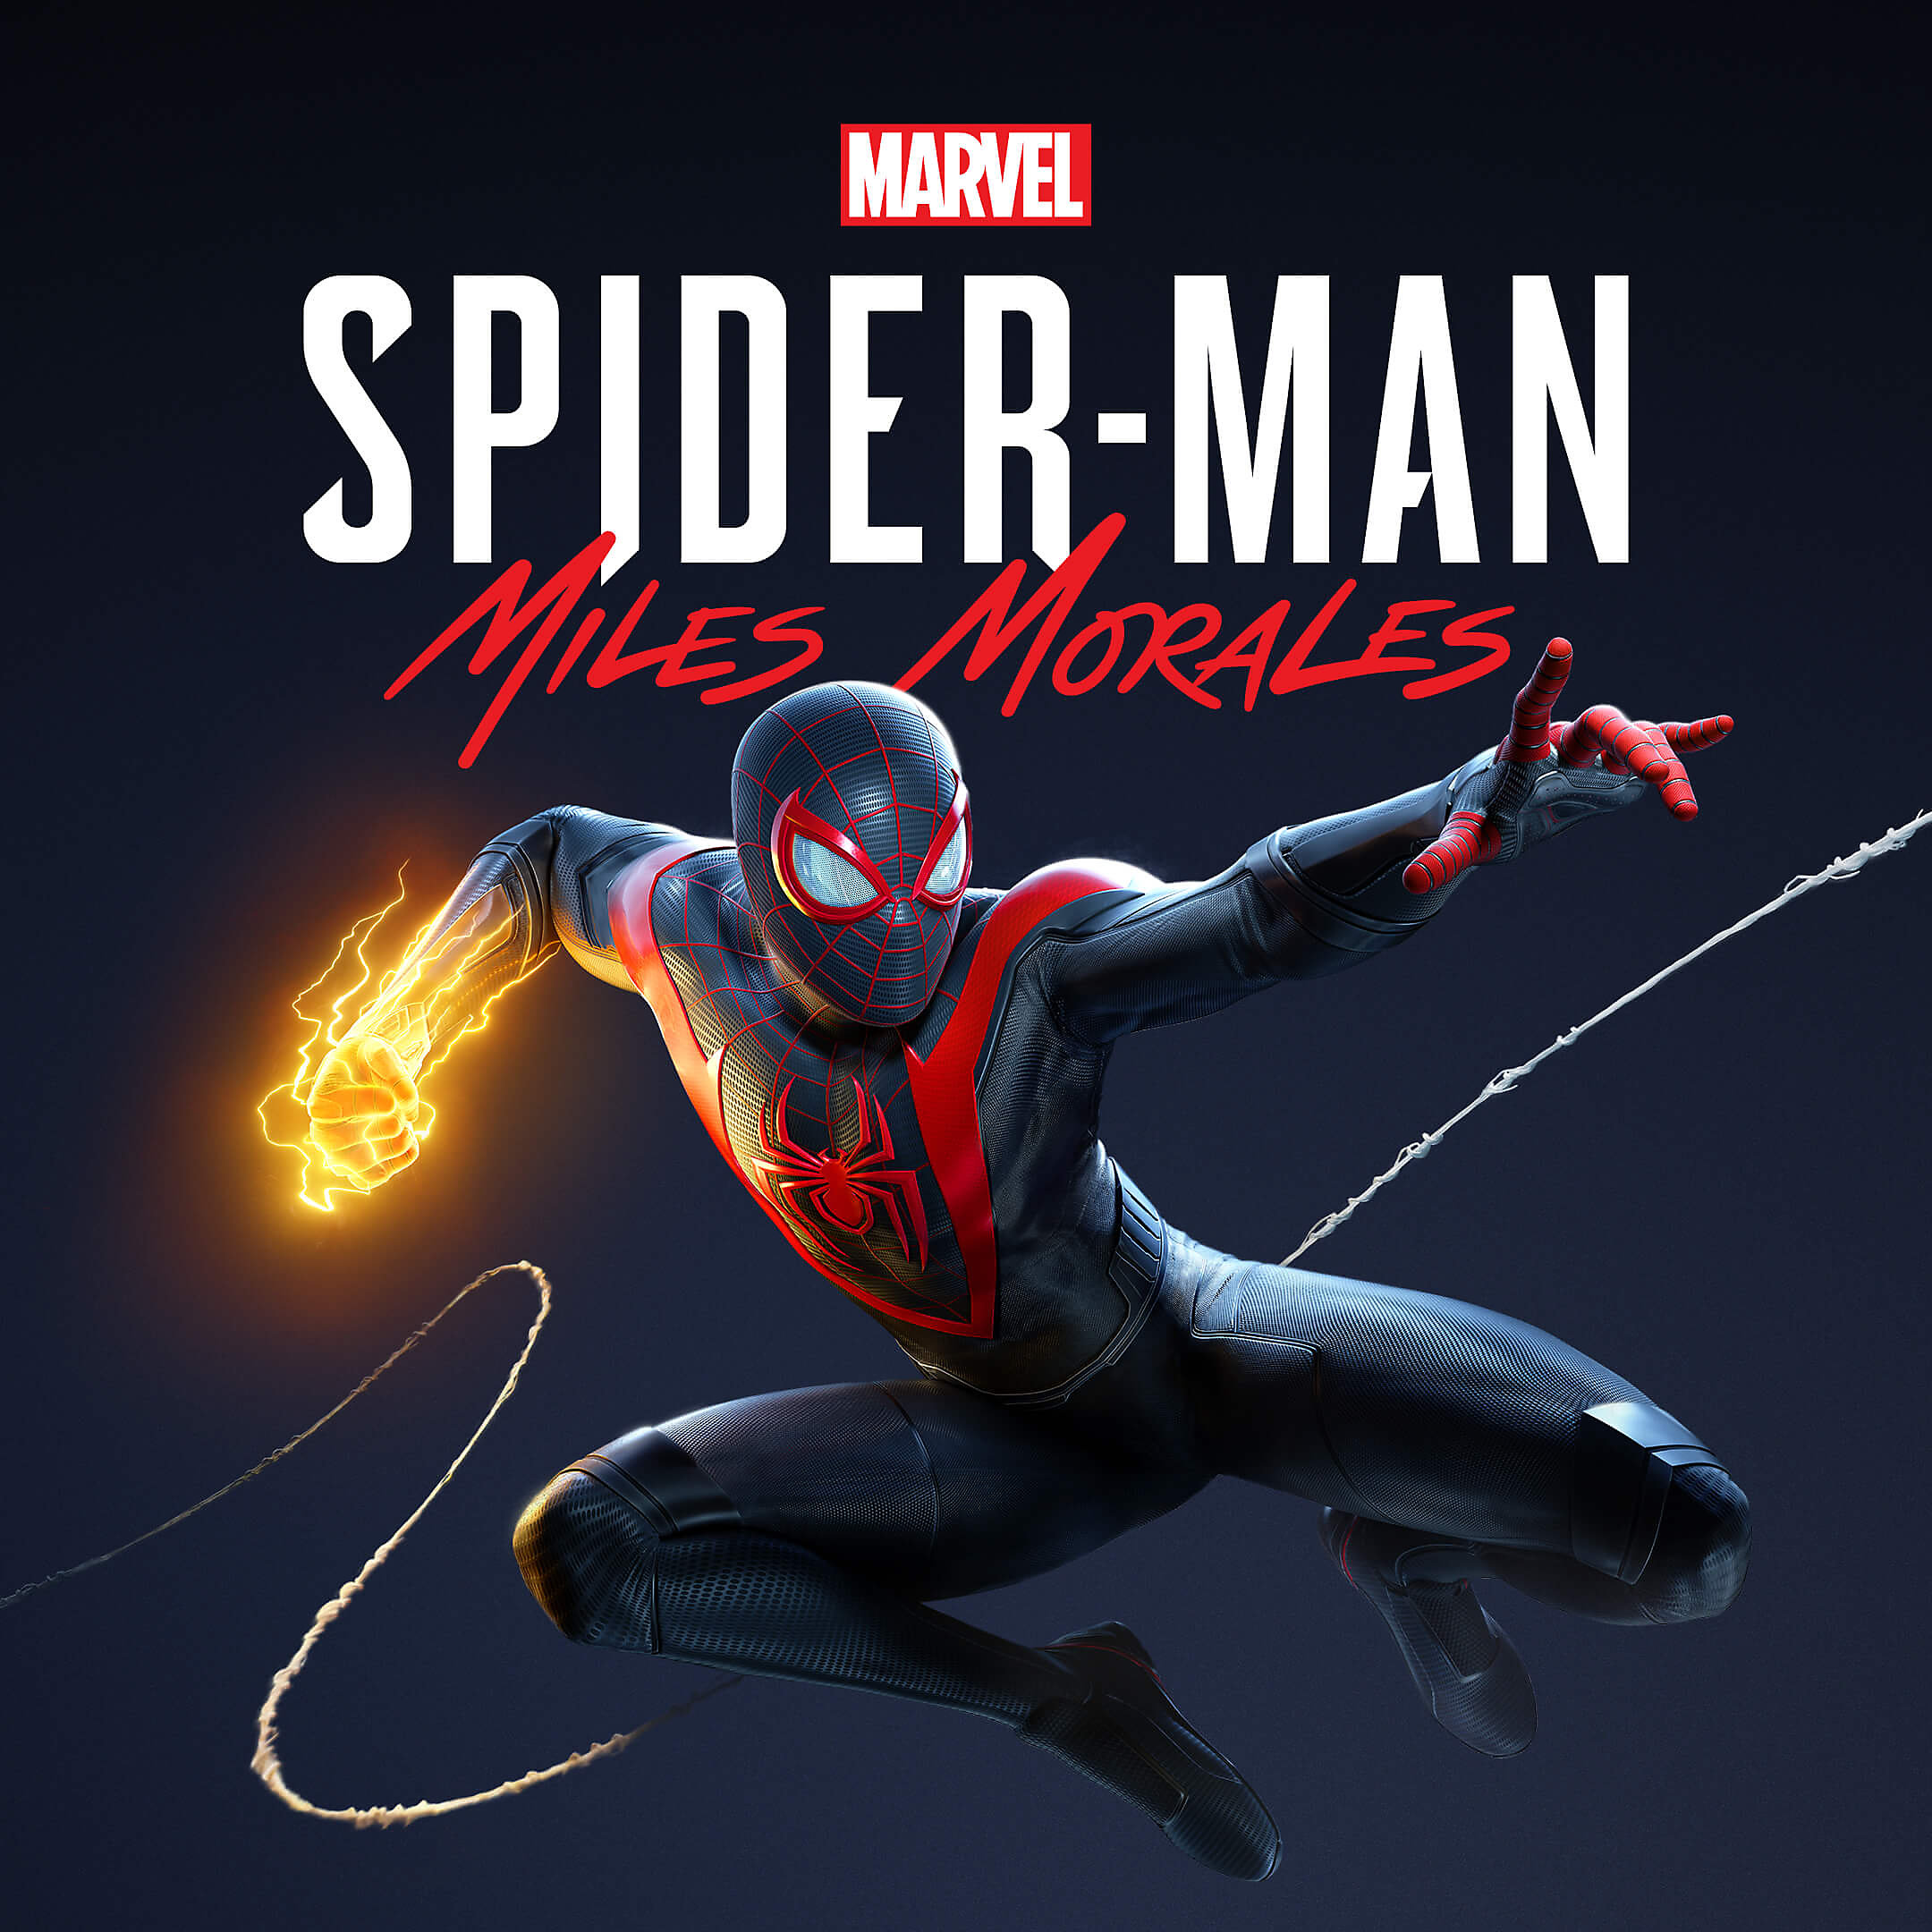 Marvel's Spider-Man Miles Morales - Store Art